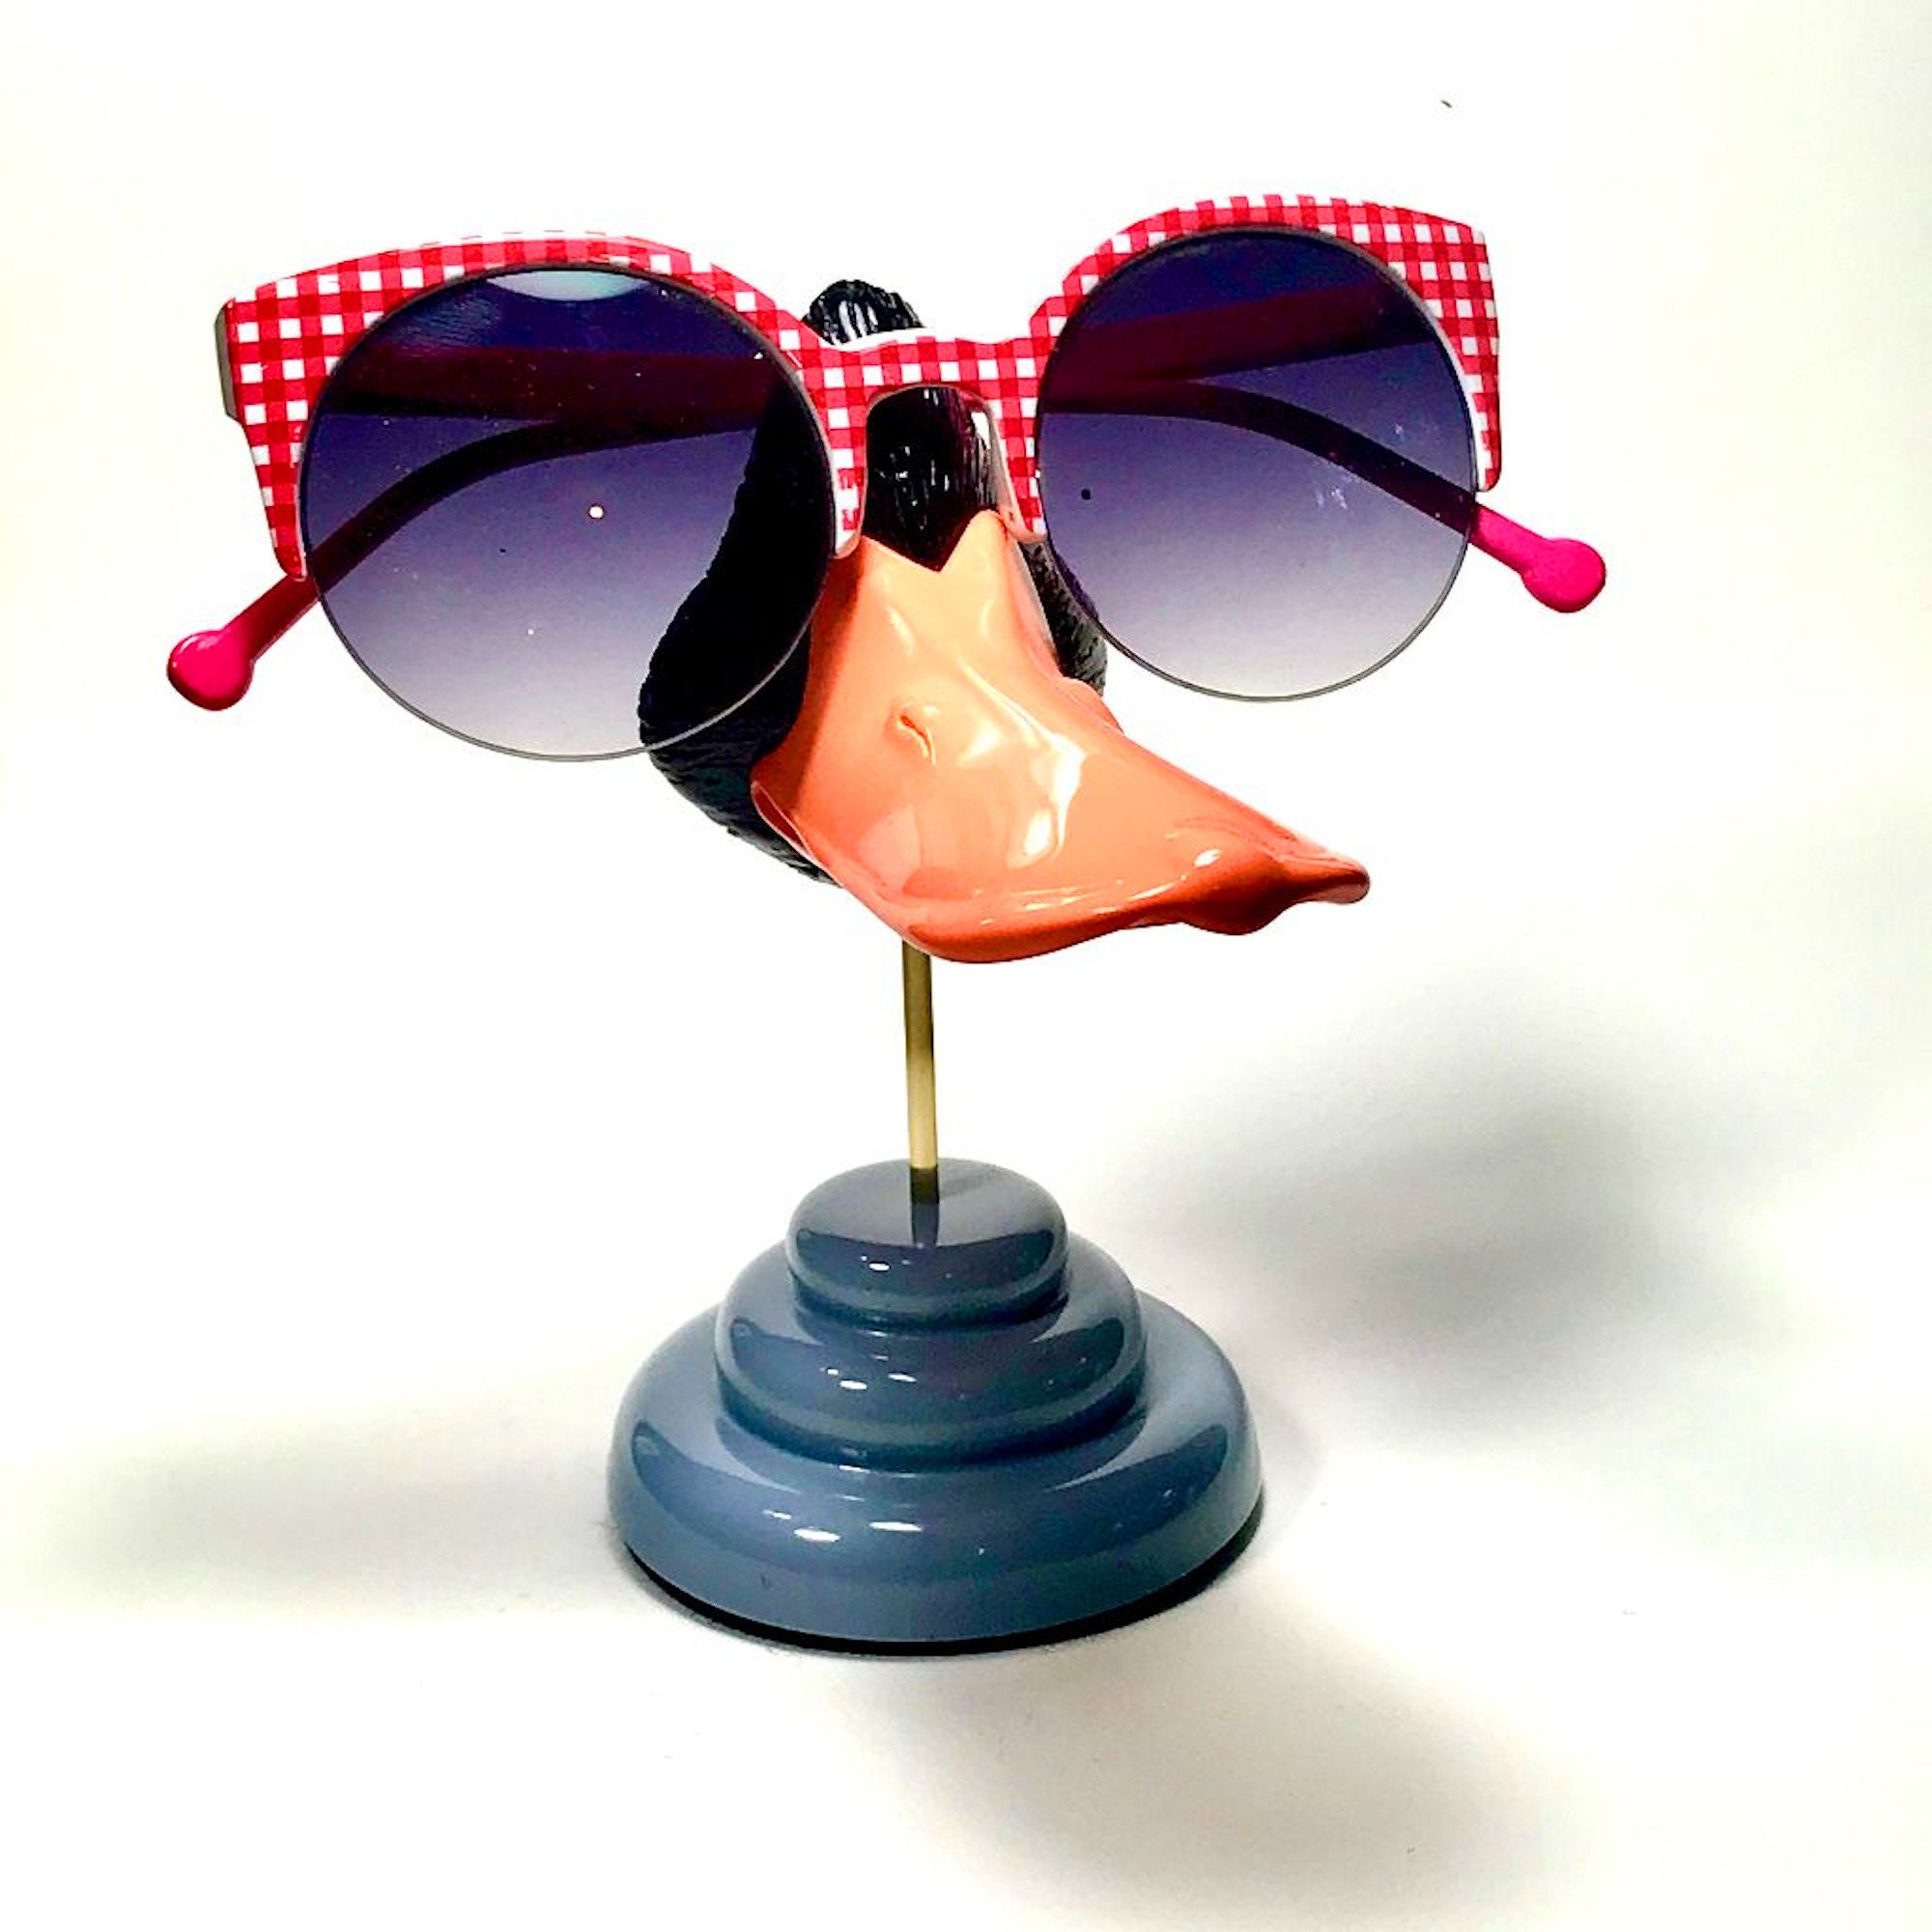 Duckbill Eyeglass Stand, Fun Sunglasses Display 